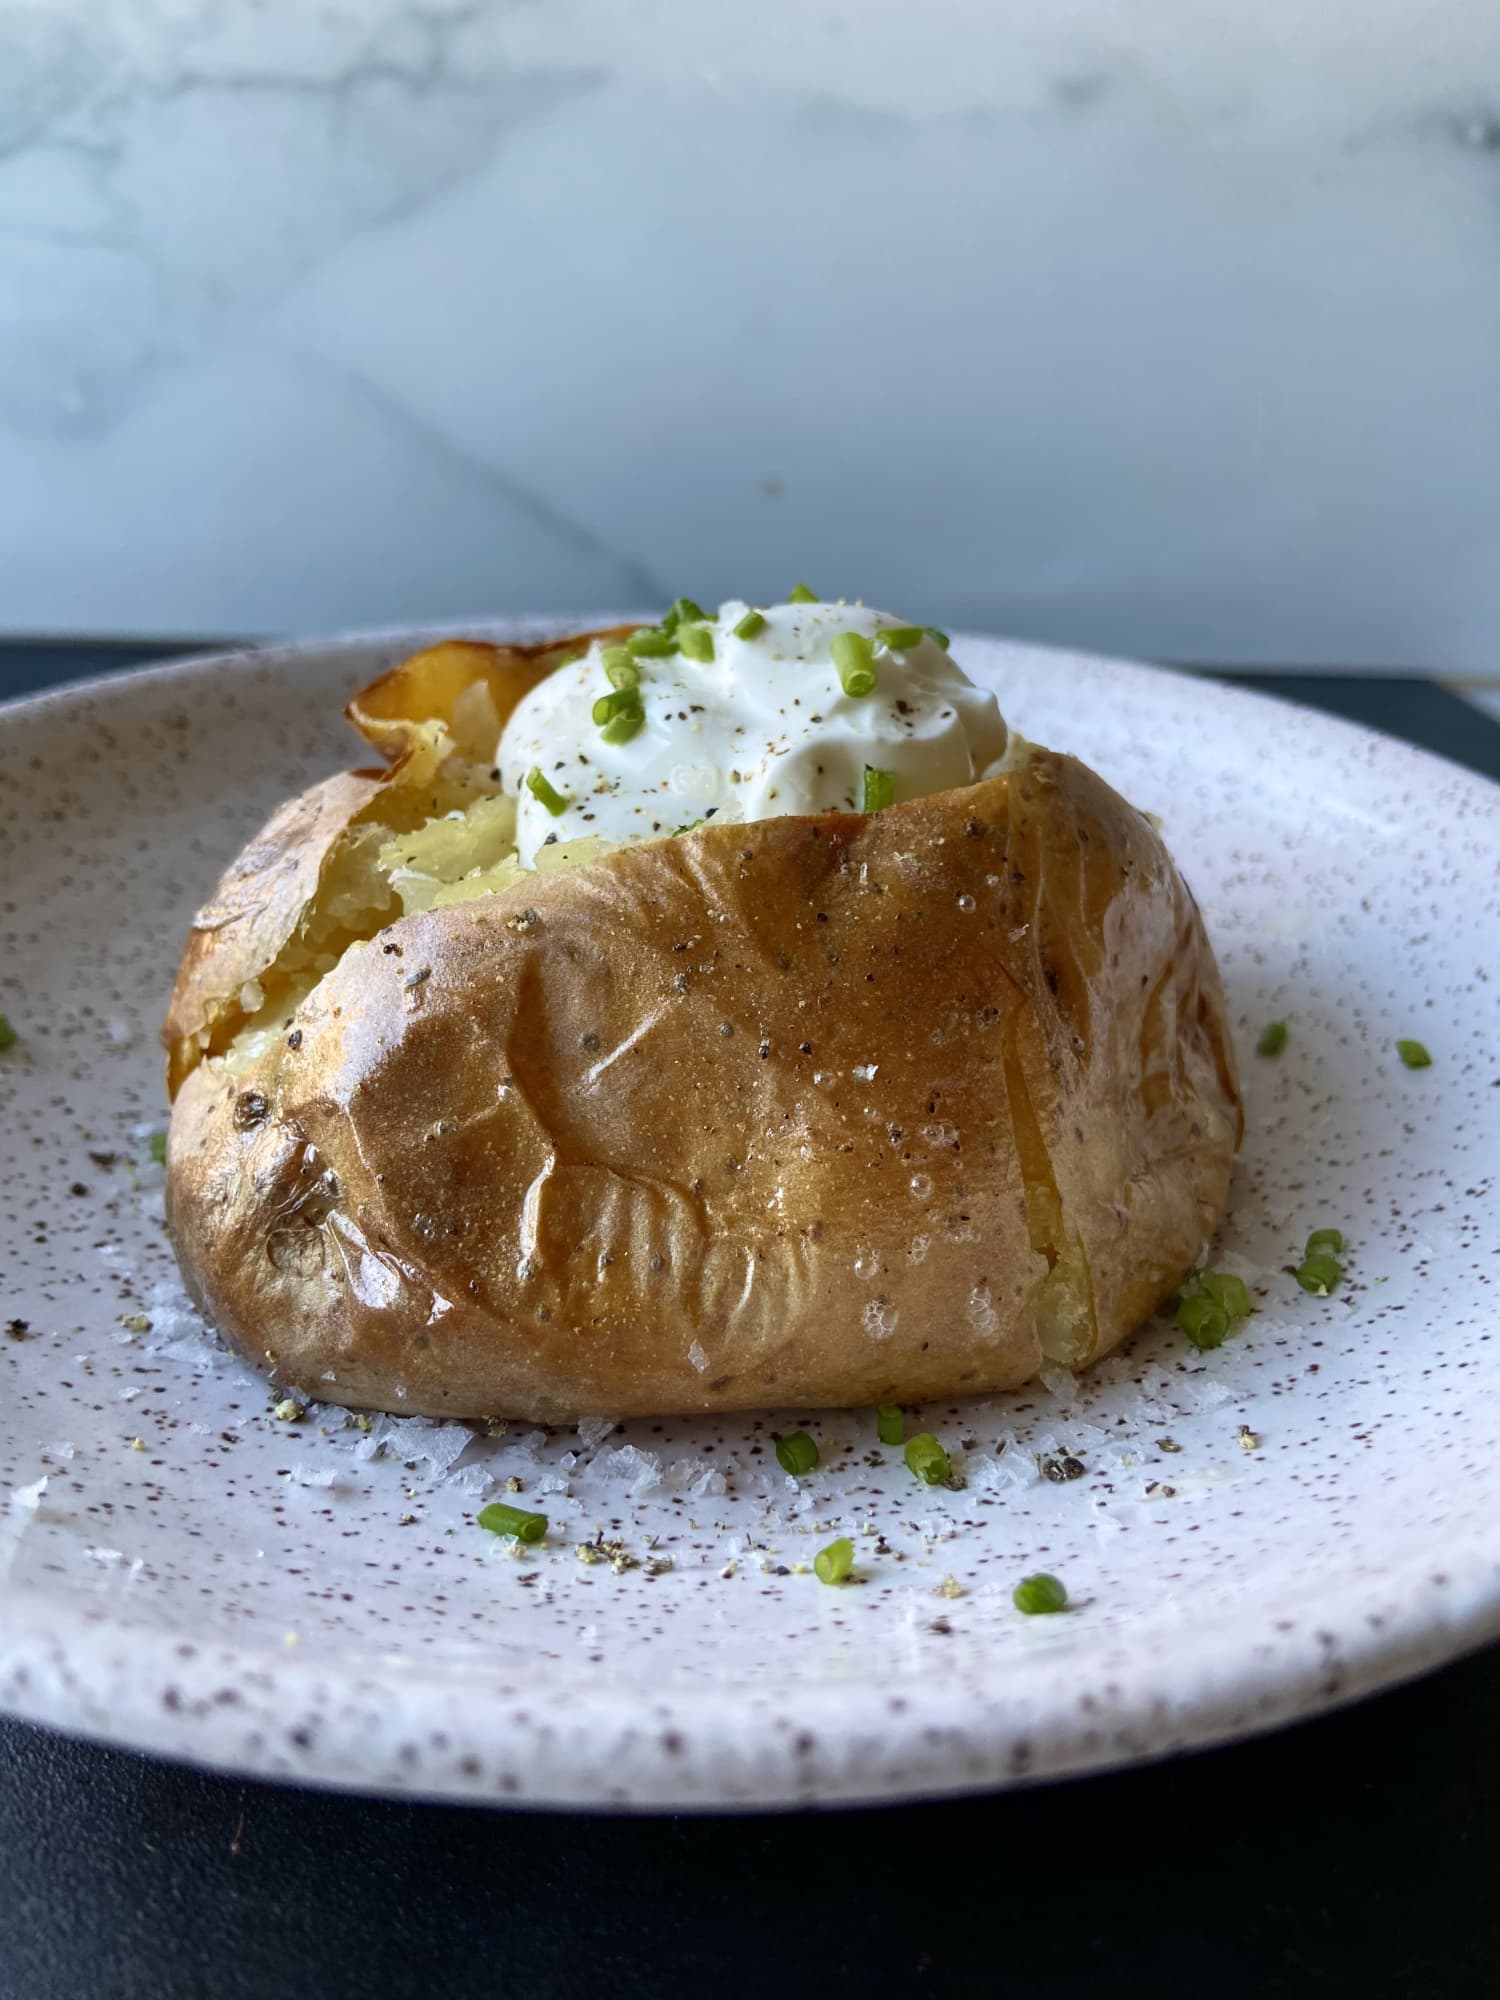 I Tried Martha Stewart's Baked Yukon Gold Potato | Kitchn